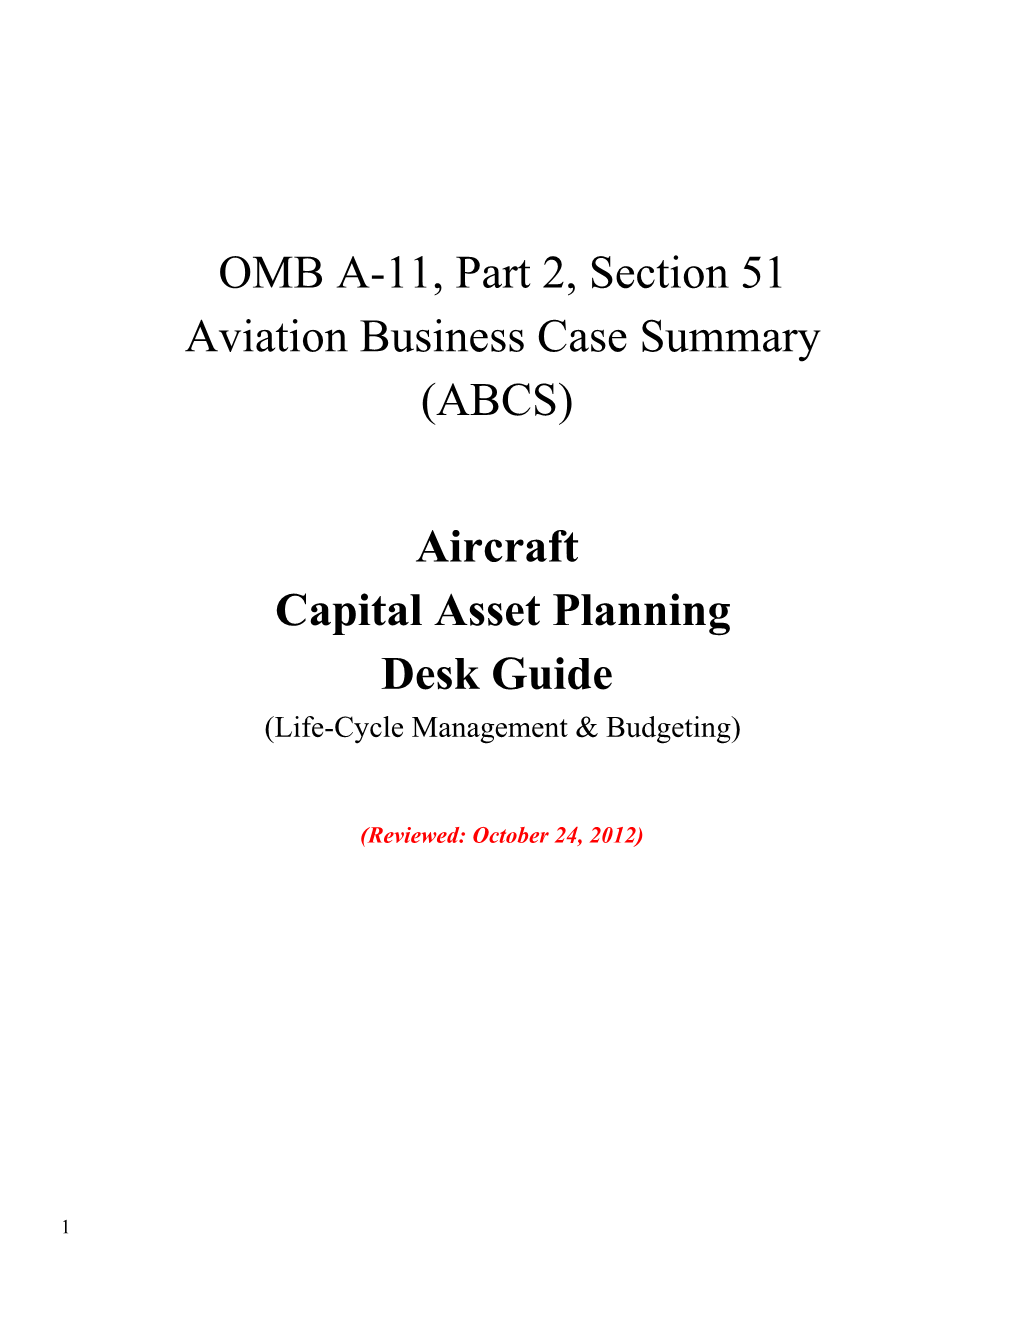 Aviation Business Case Summary s1